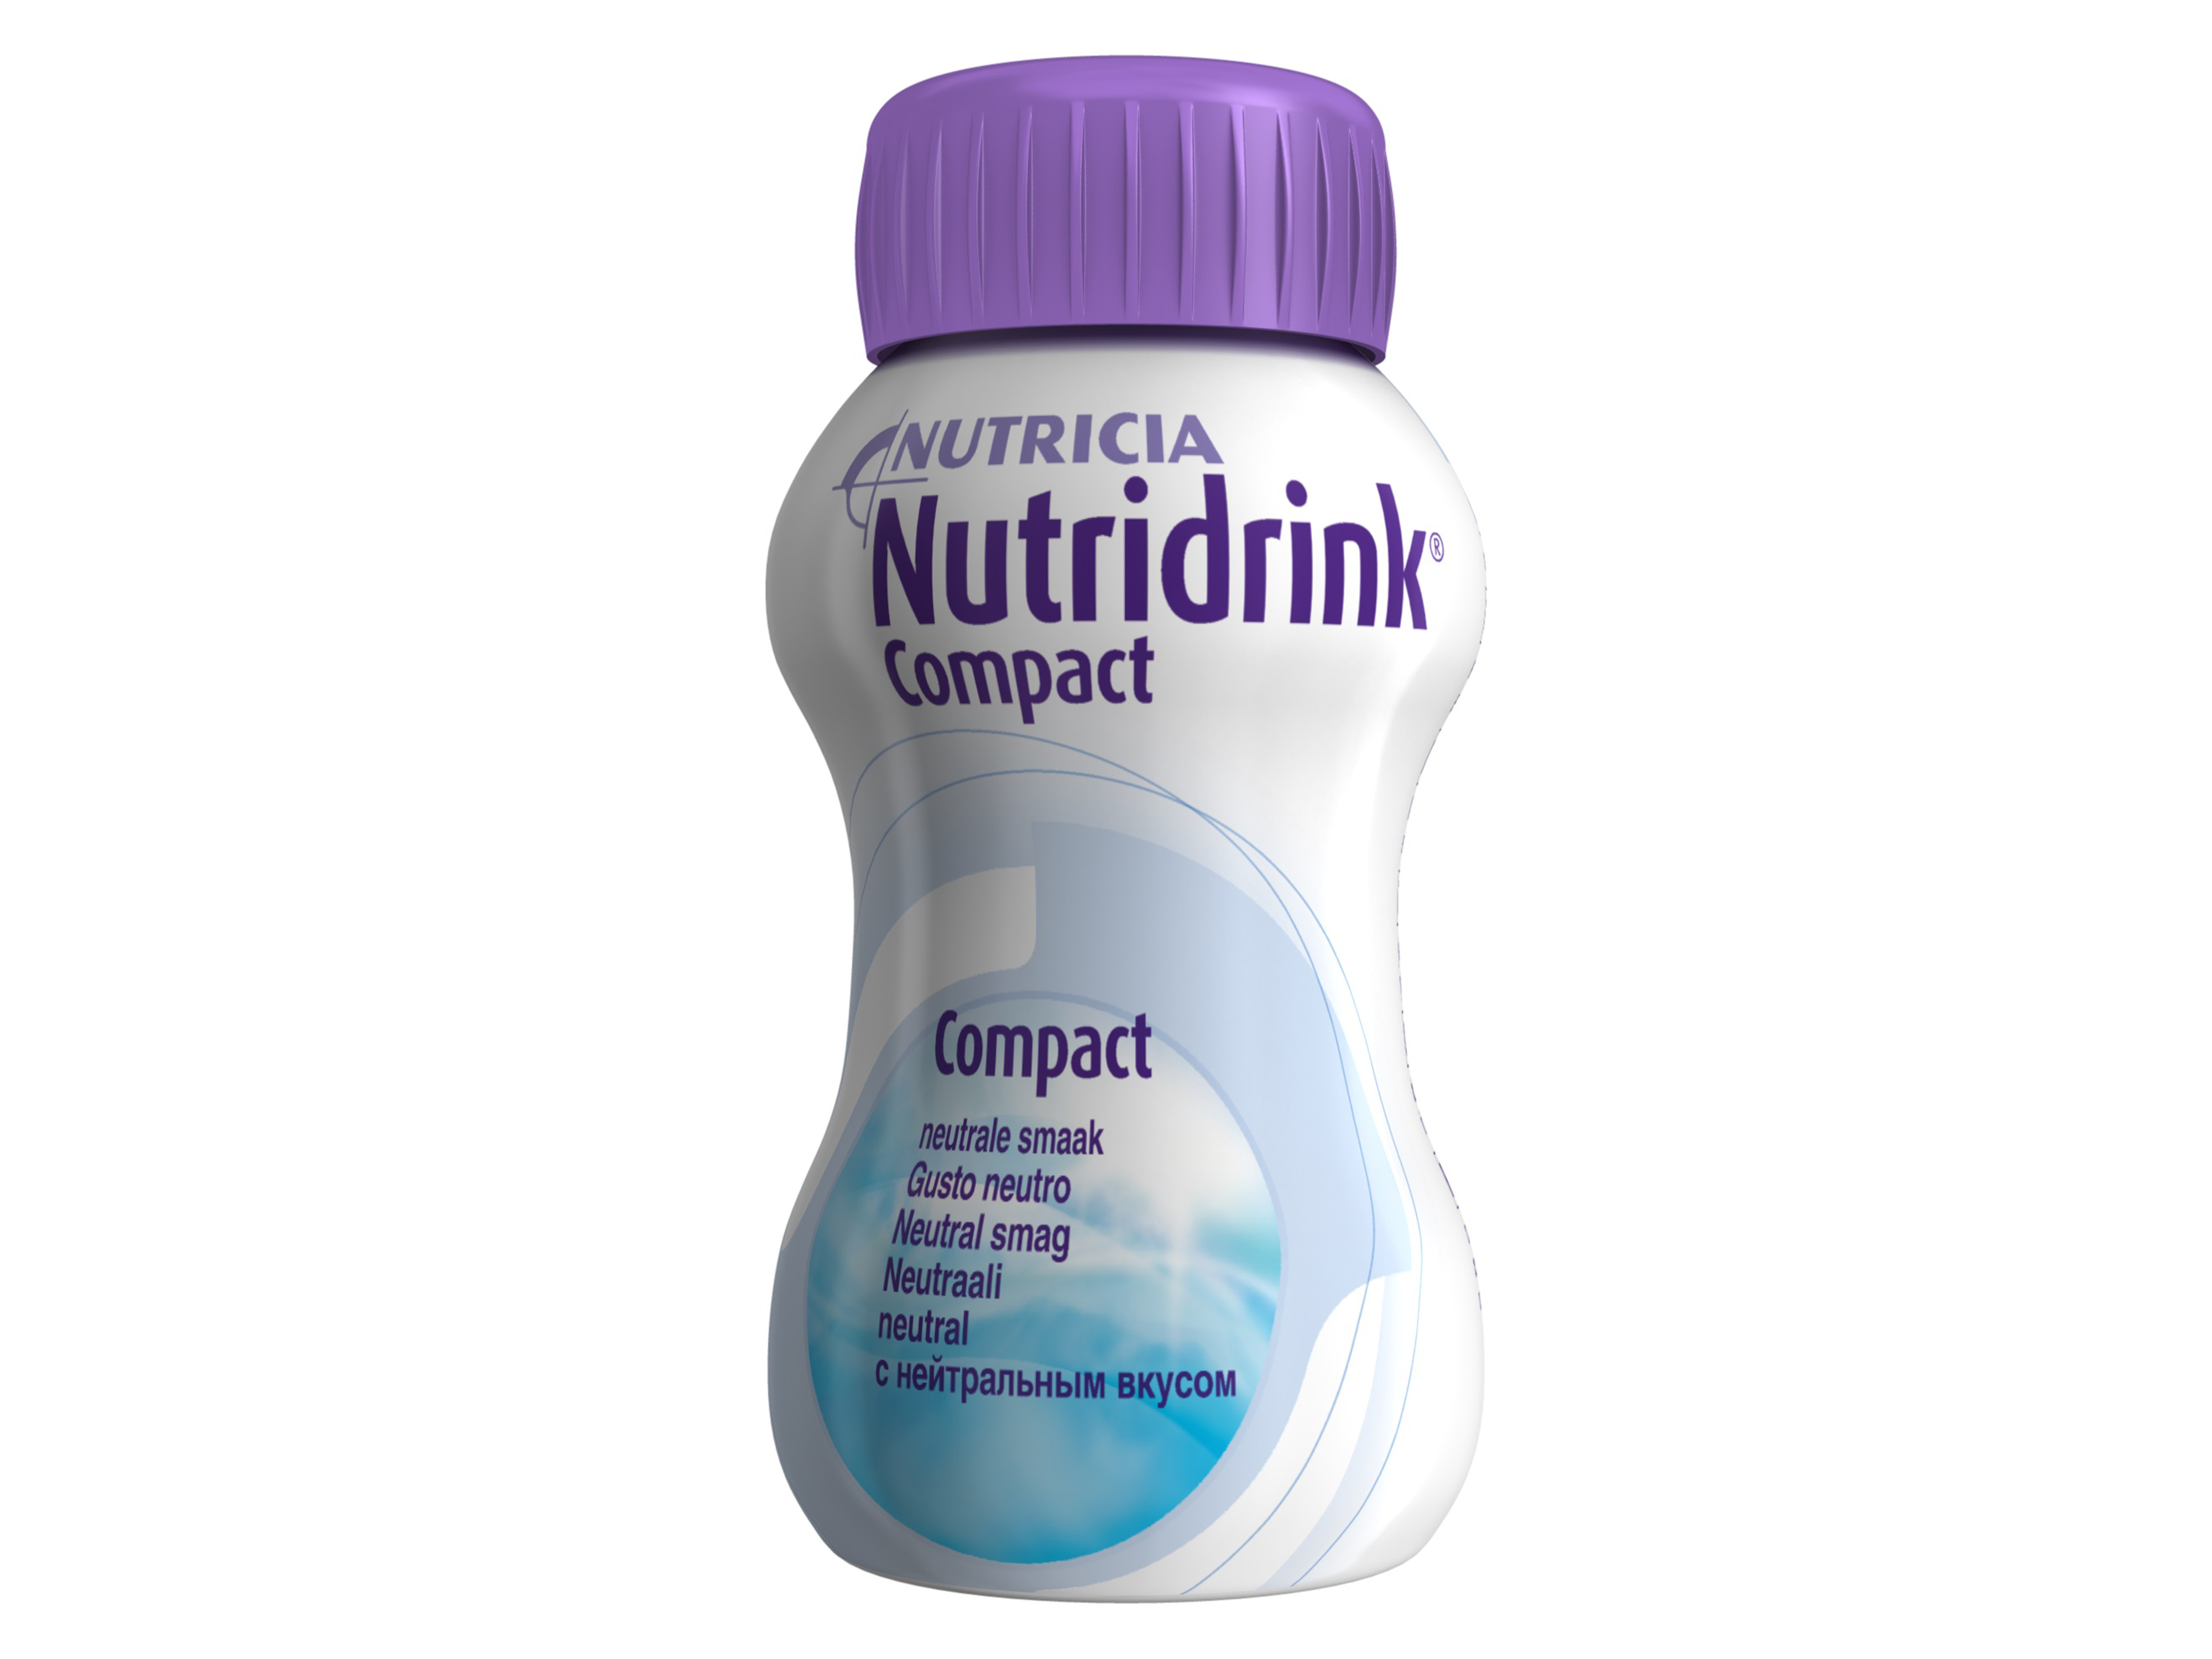 Nutridrink Compact næringsdrikk, Nøytral, 4 x 125 ml